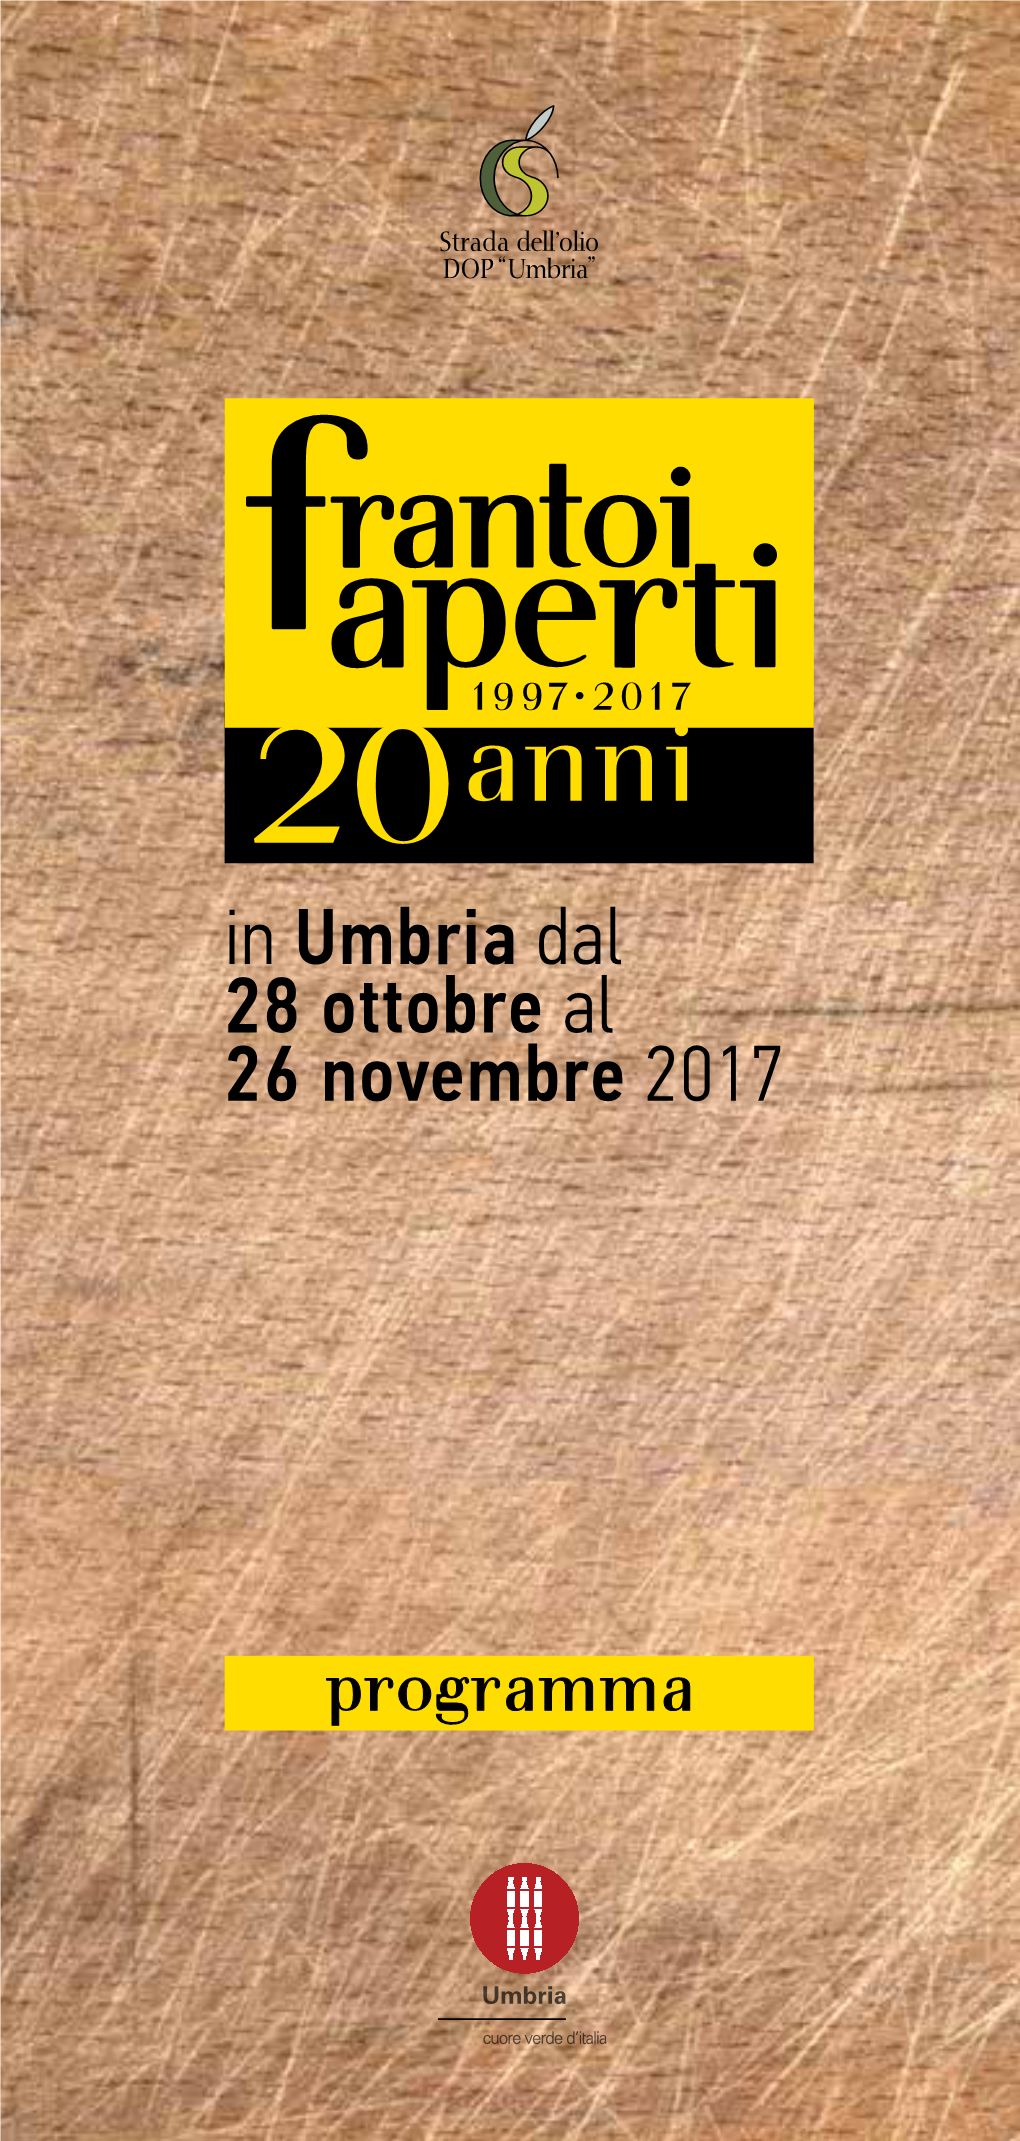 In Umbria Dal 28 Ottobre Al 26 Novembre 2017